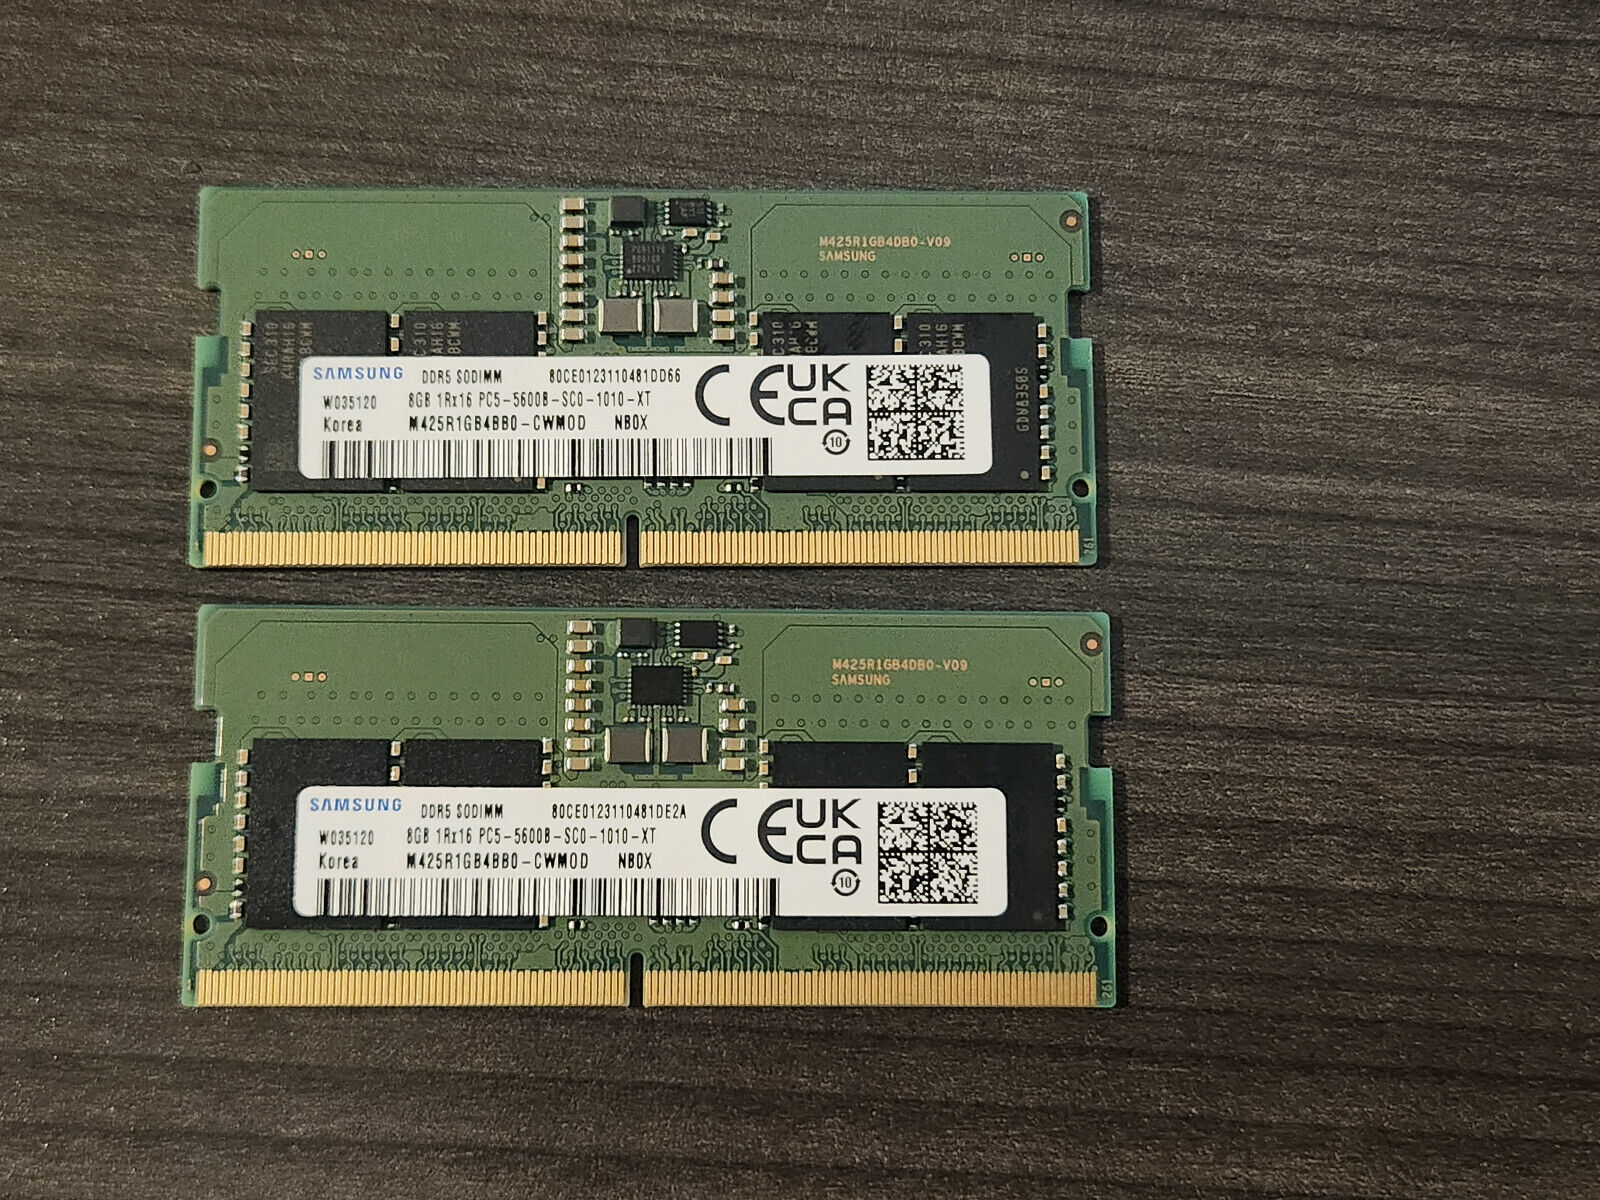 Samsung 16GB Kit(2x8GB) PC5-5600B DDR5 SODIMM Memory M425R1GB4BB0-CWM0D